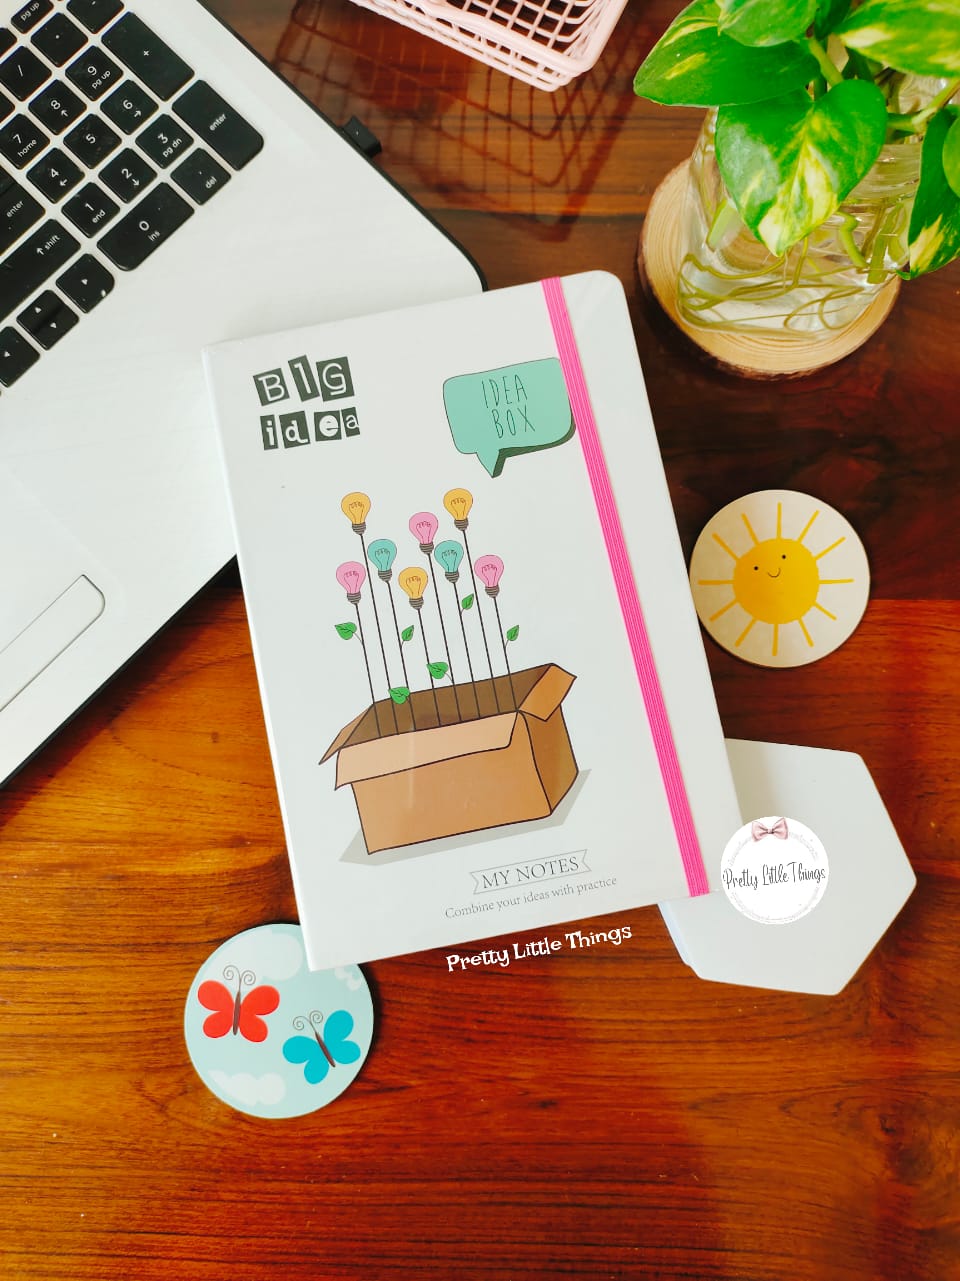 'Big Ideas' - IdeaBox - Diary /Notebook